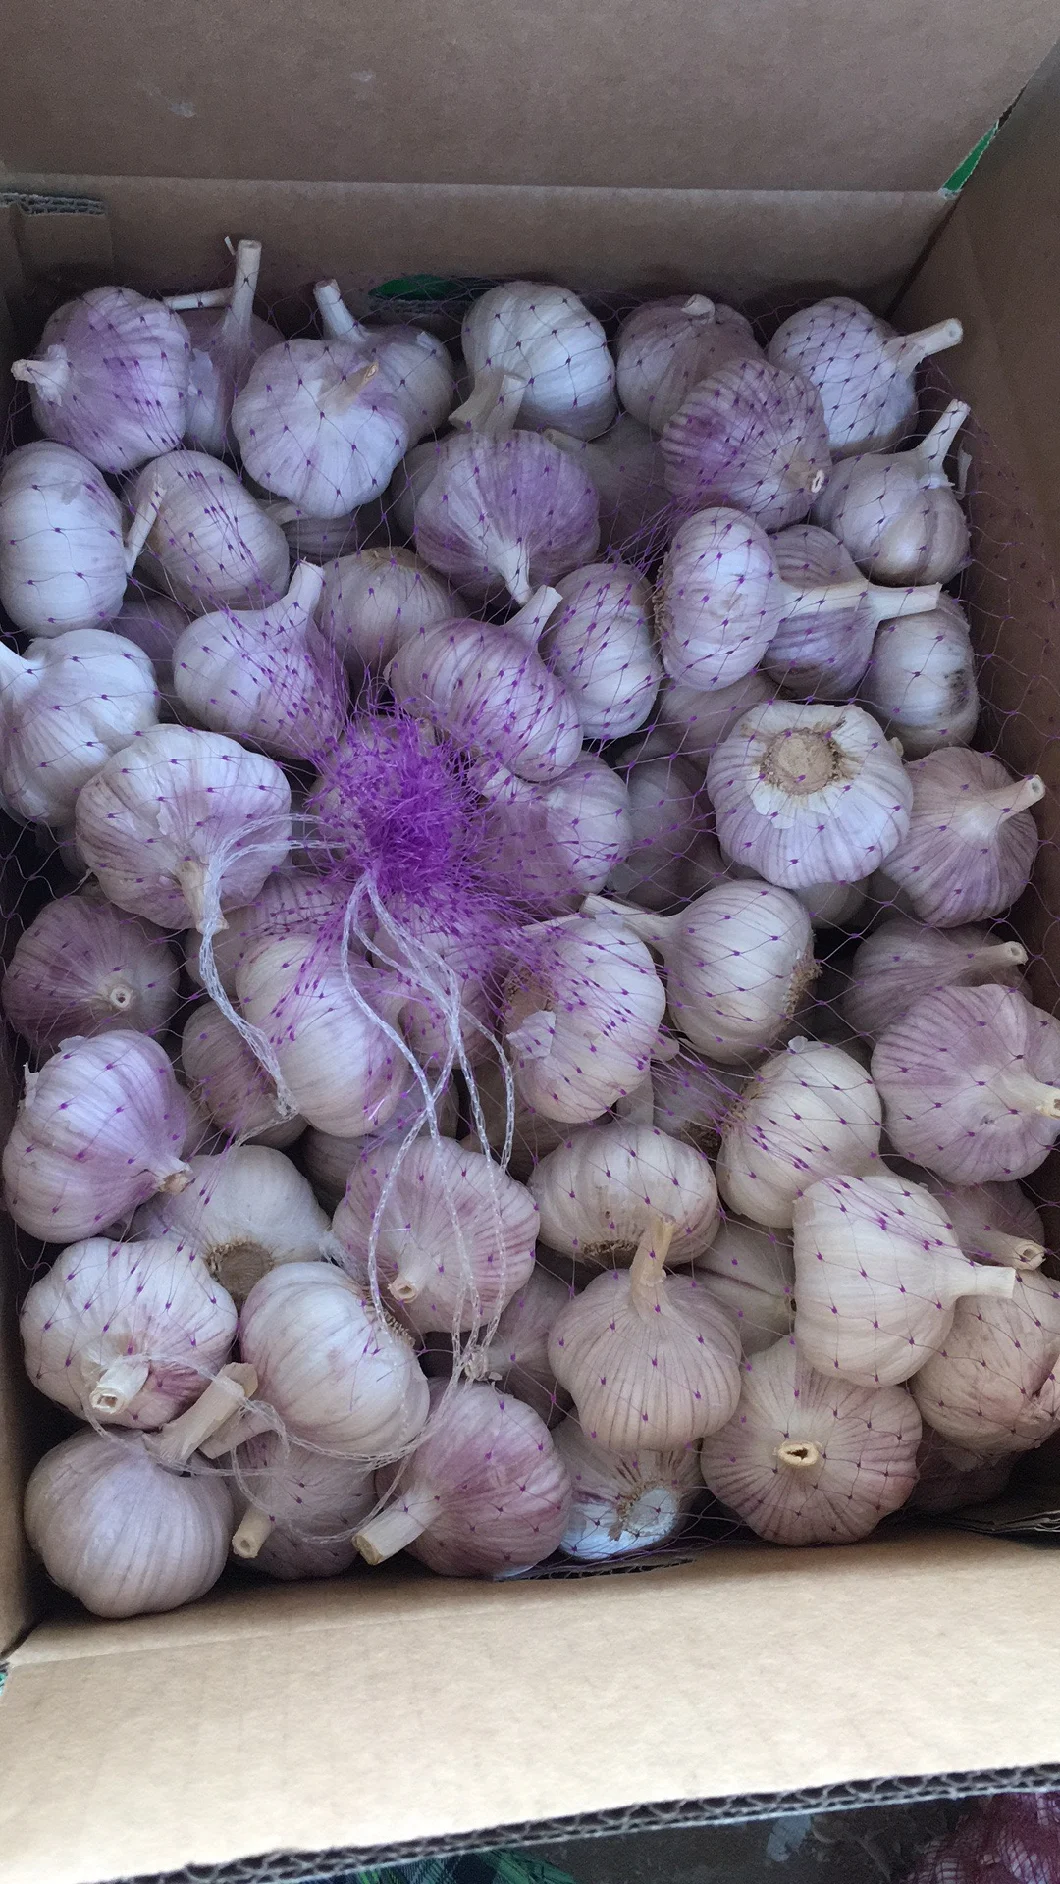 Fresh Pure White Garlic /Normal White Garlic/White Garlic with SGS Certificate